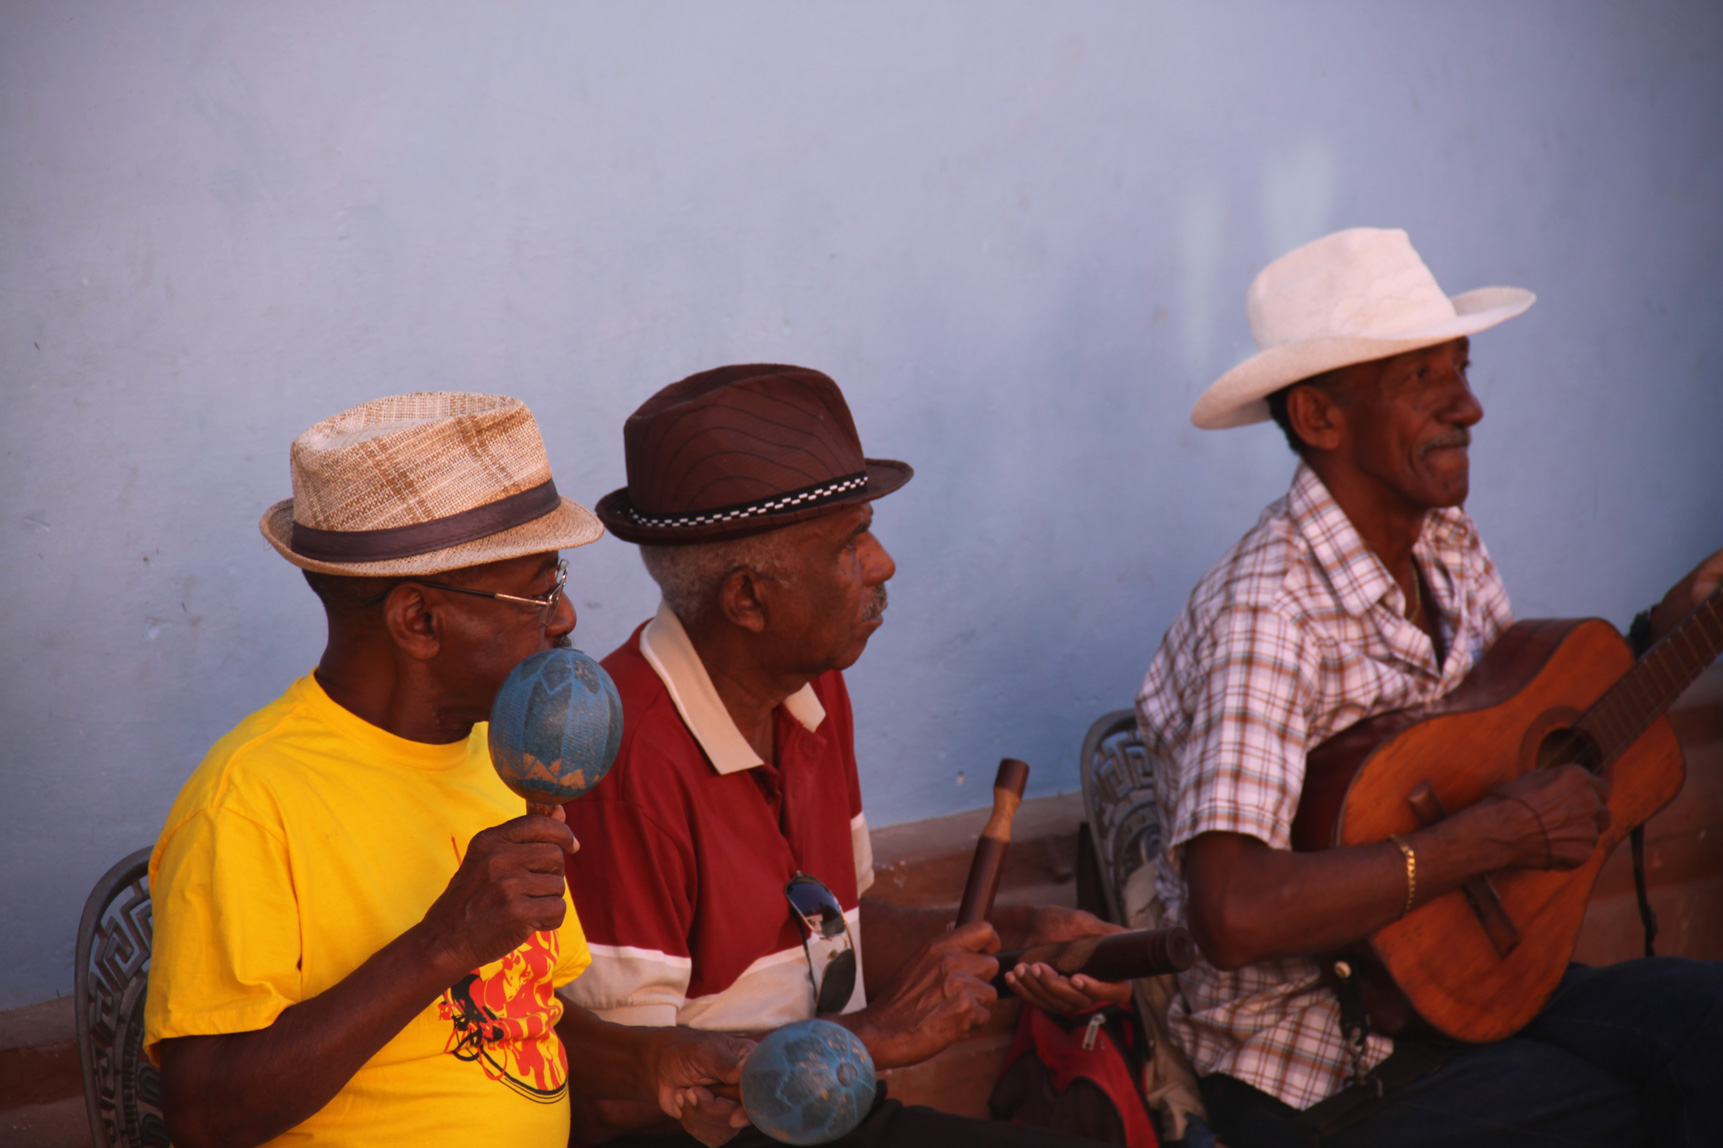 Musicians in Cuba